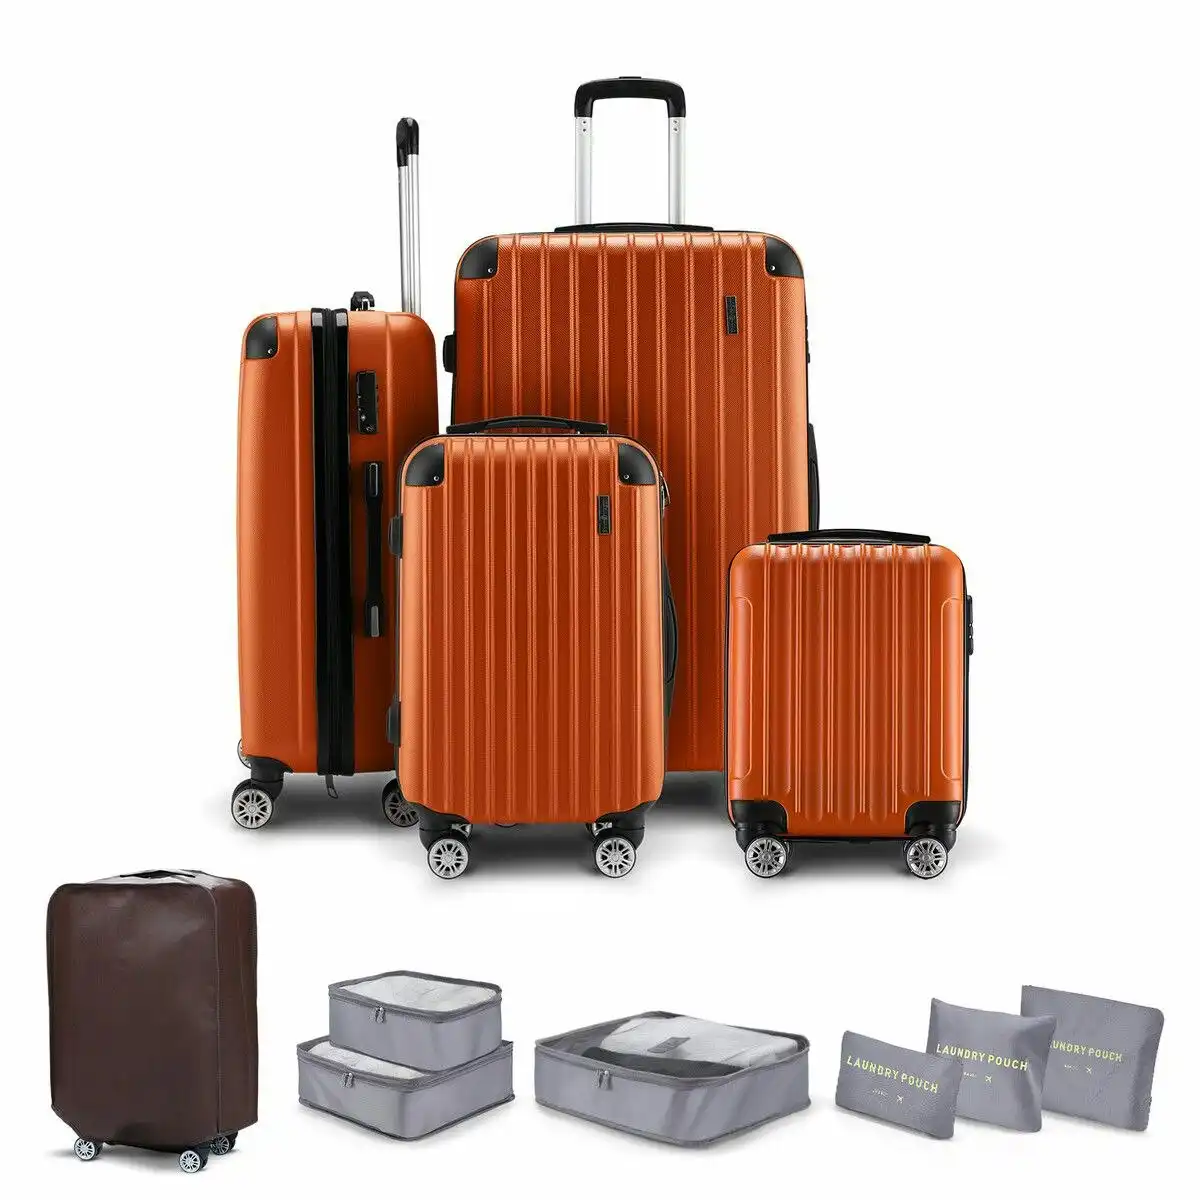 Buon Viaggio Luggage Suitcase Set 4 Piece Carry On Traveller Checked Bag Hard Shell Lightweight Rolling Trolley TSA Lock Orange